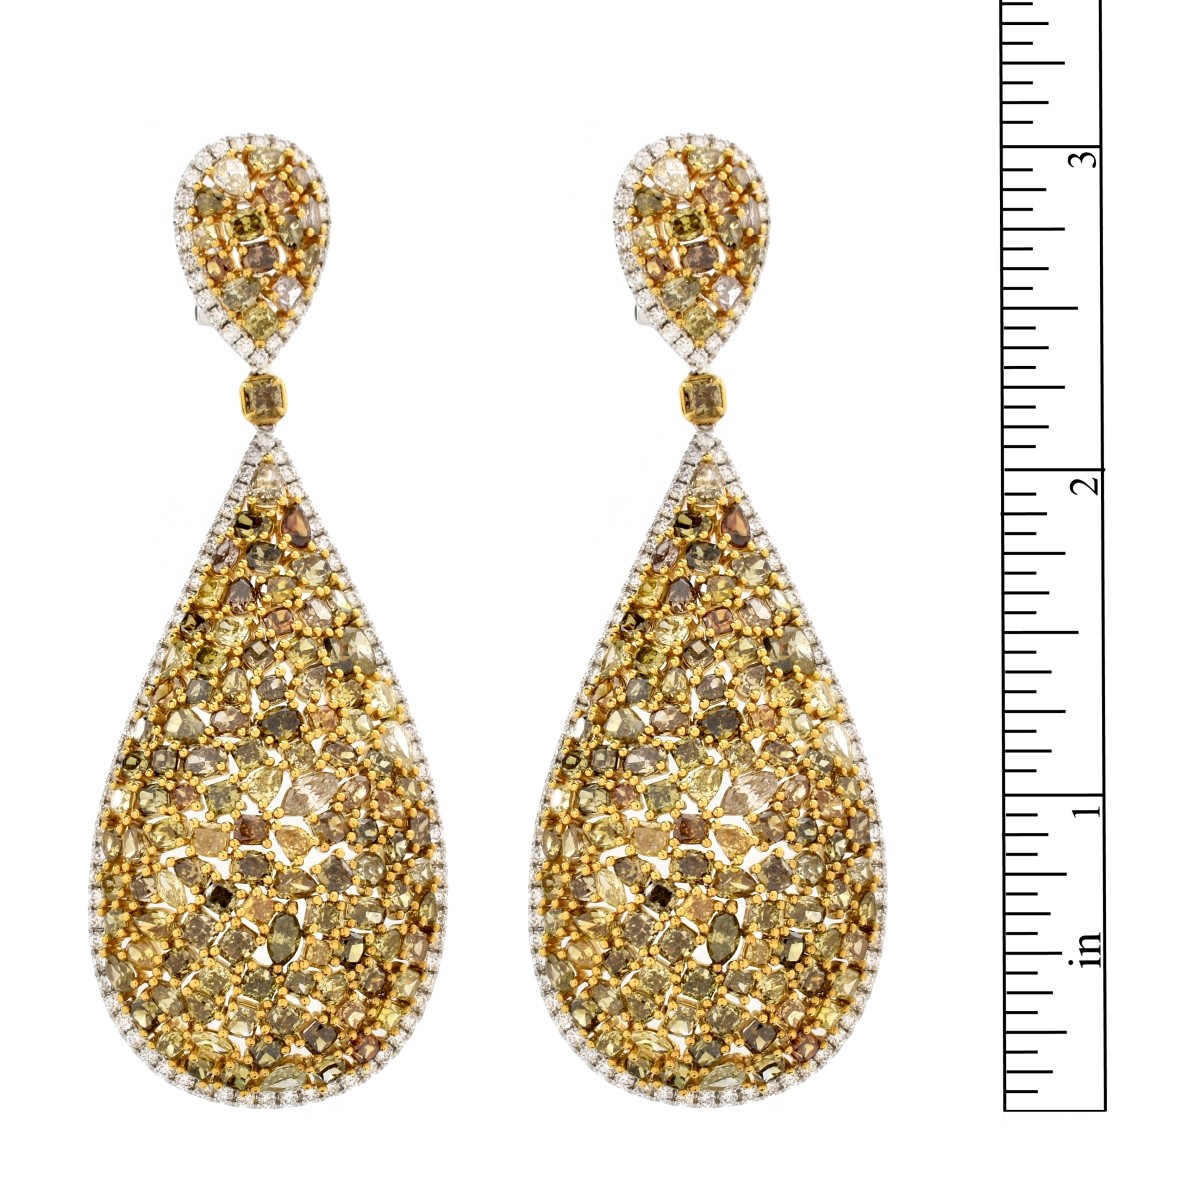 Diamond and 18K Earrings.